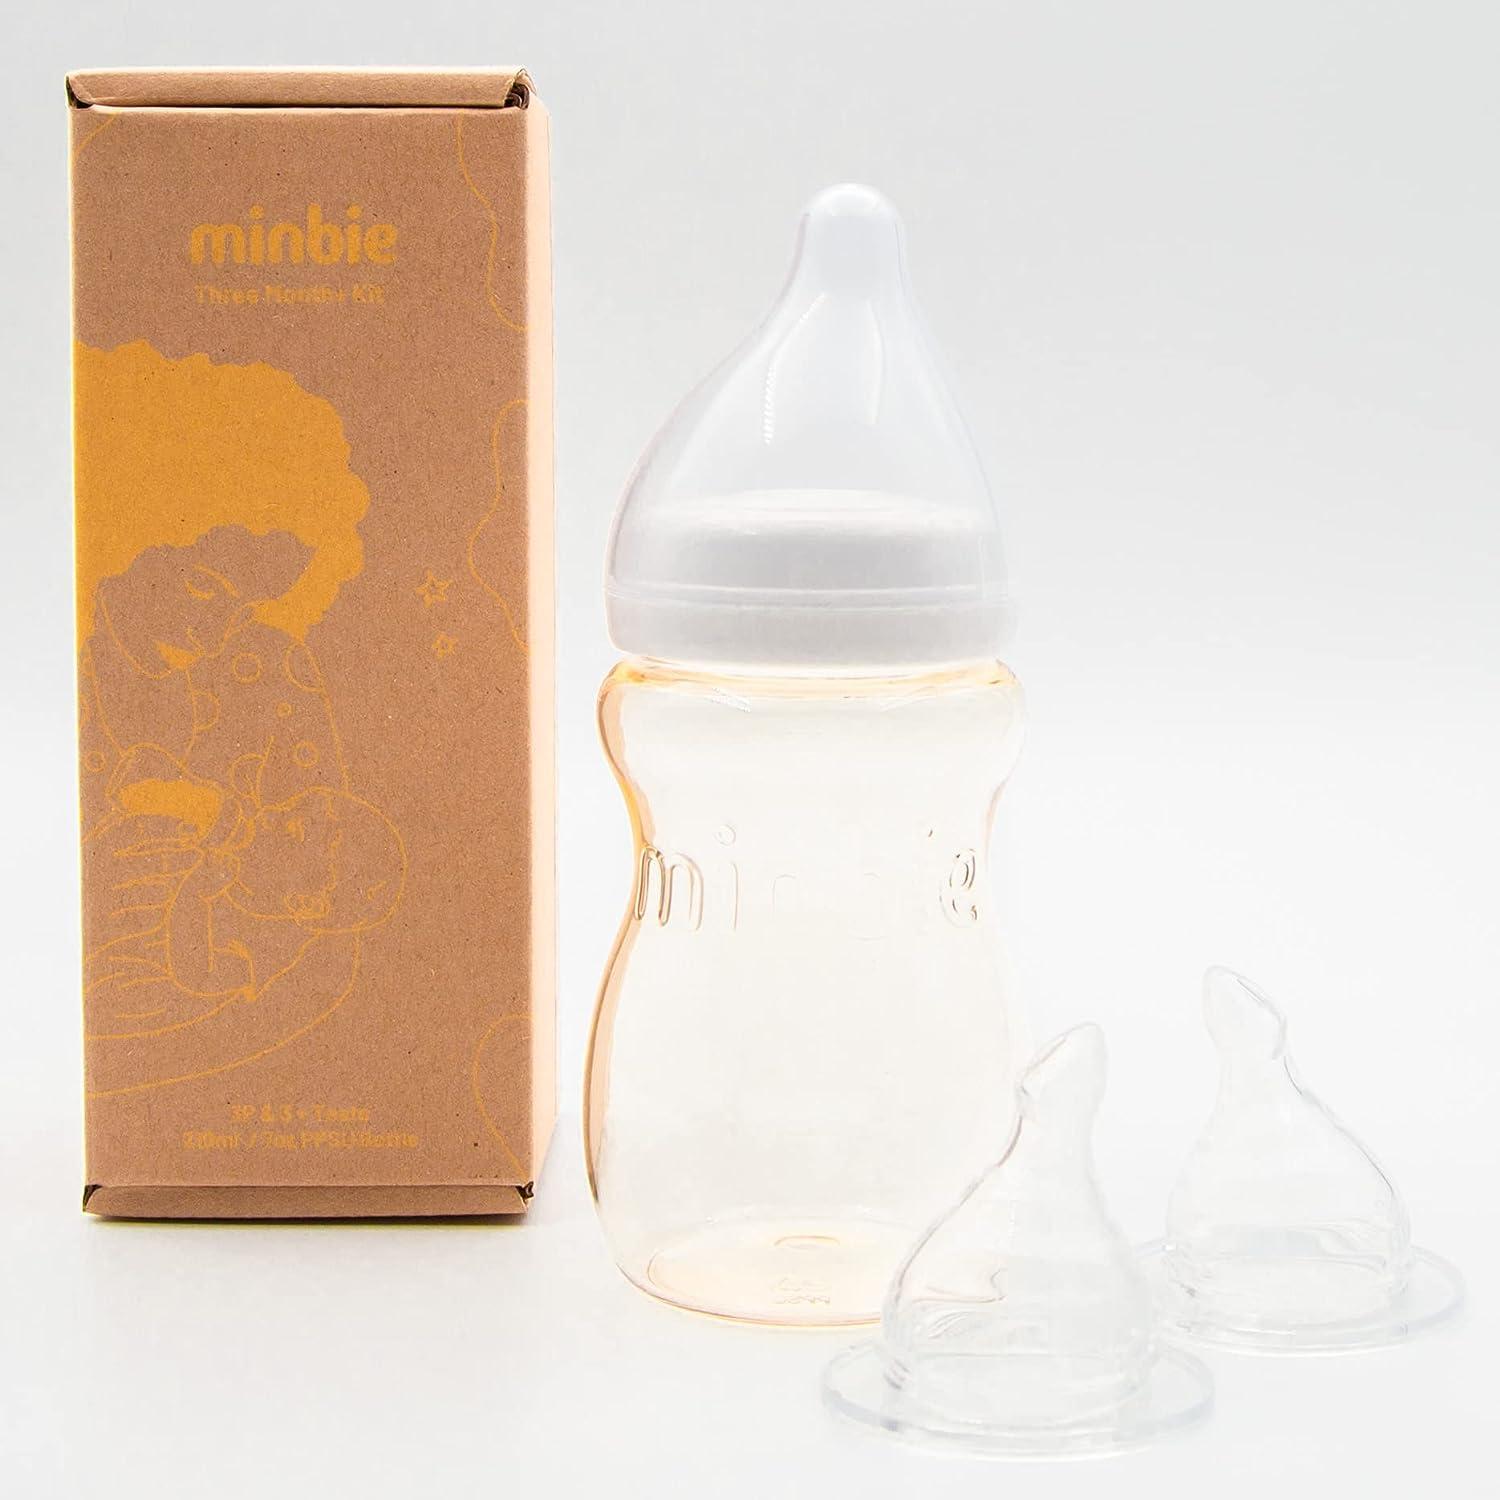 Breastfeeding Newborn Kit